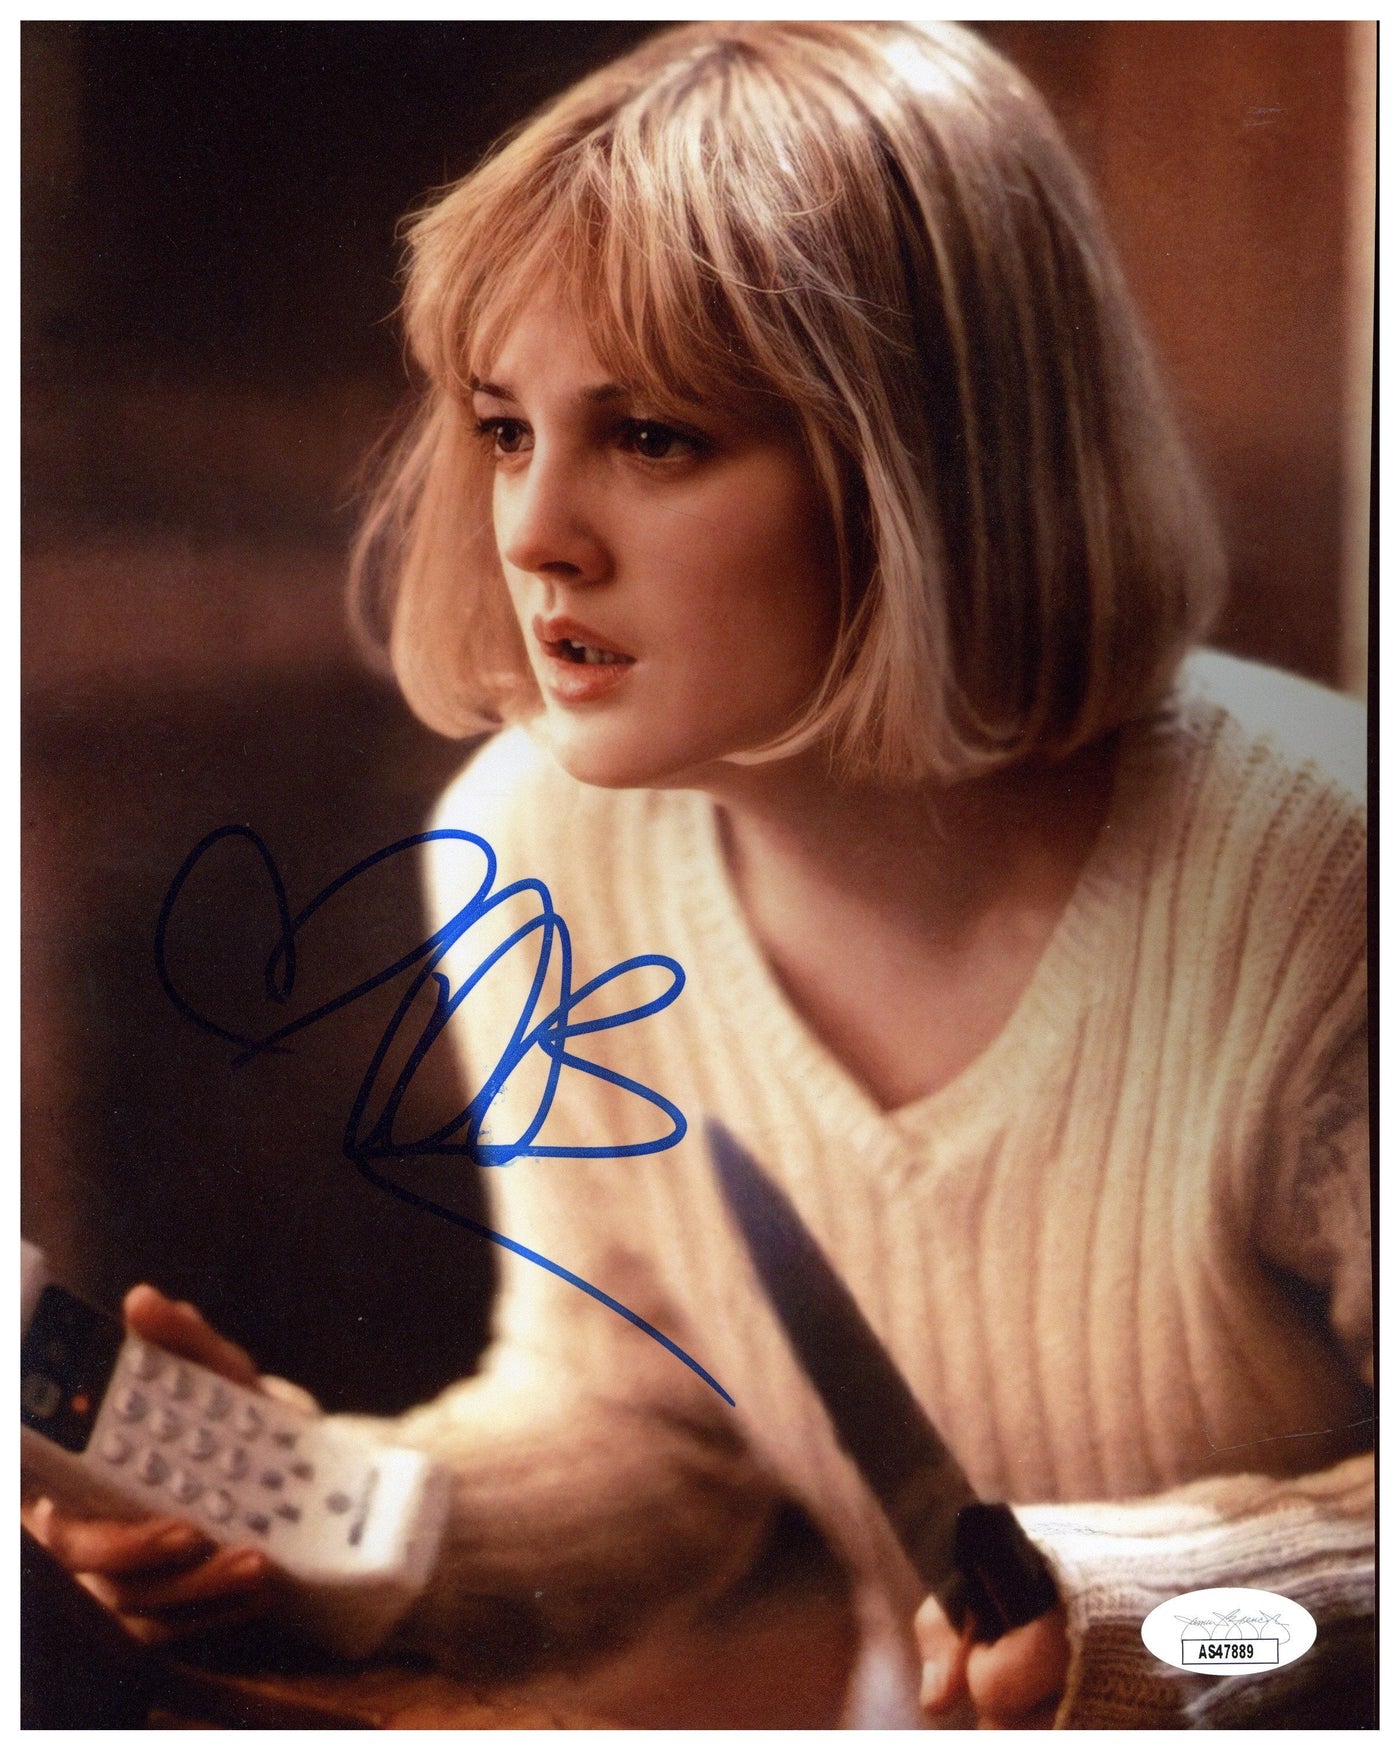 Drew Barrymore Signed 8x10 Photo Scream Ghostface Autographed JSA COA